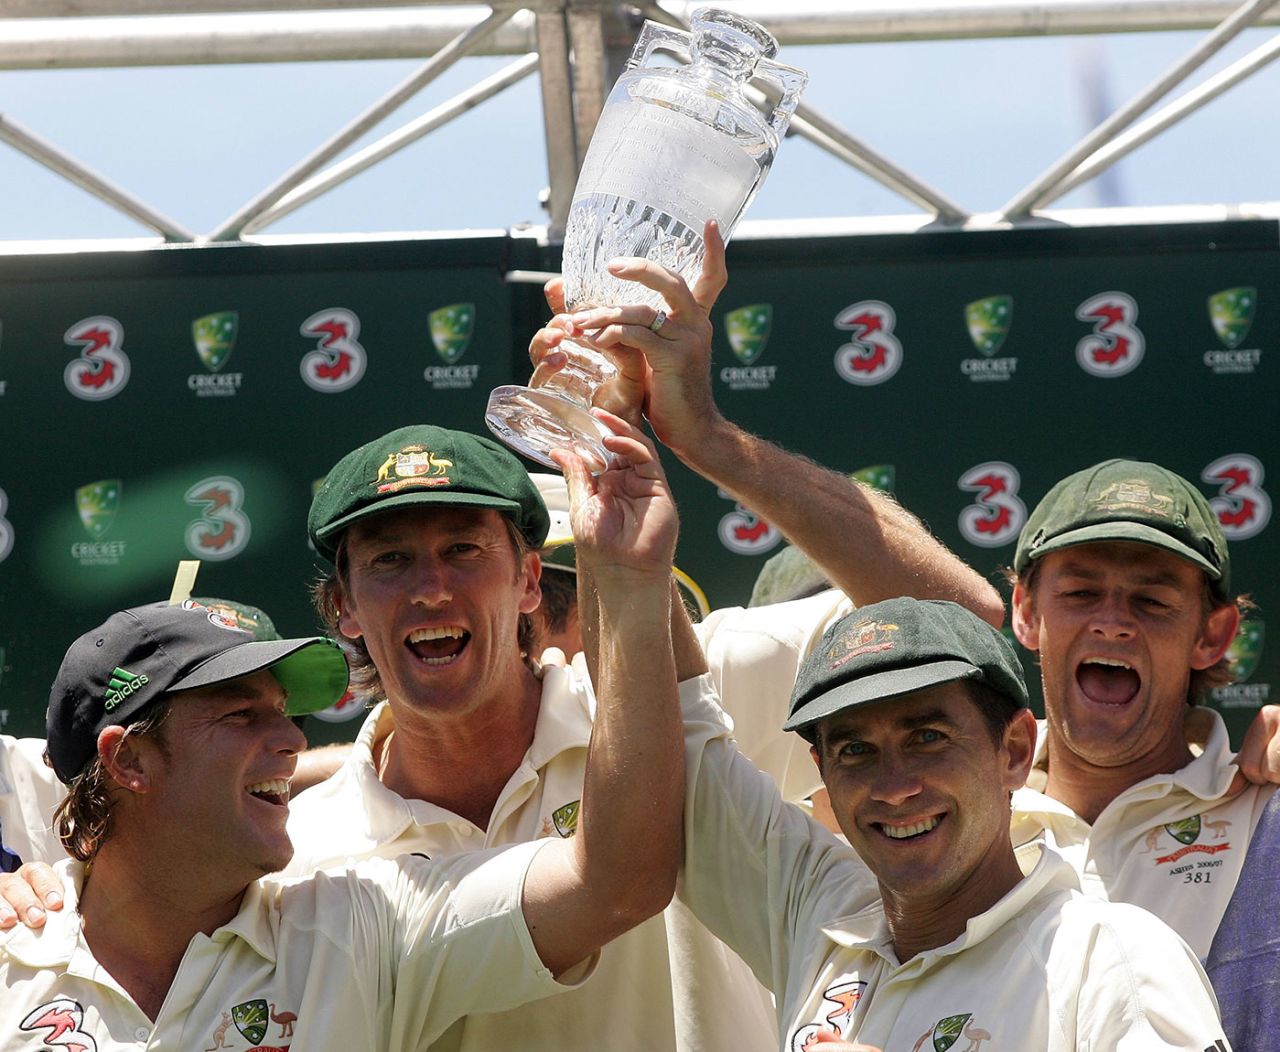 Shane Warne, Glenn McGrath, Justin Langer and Adam Gilchrist with the Ashes trophy after Australia secured a 5-0 whitewash, Australia v England, 5th Test, Sydney, January 5, 2007